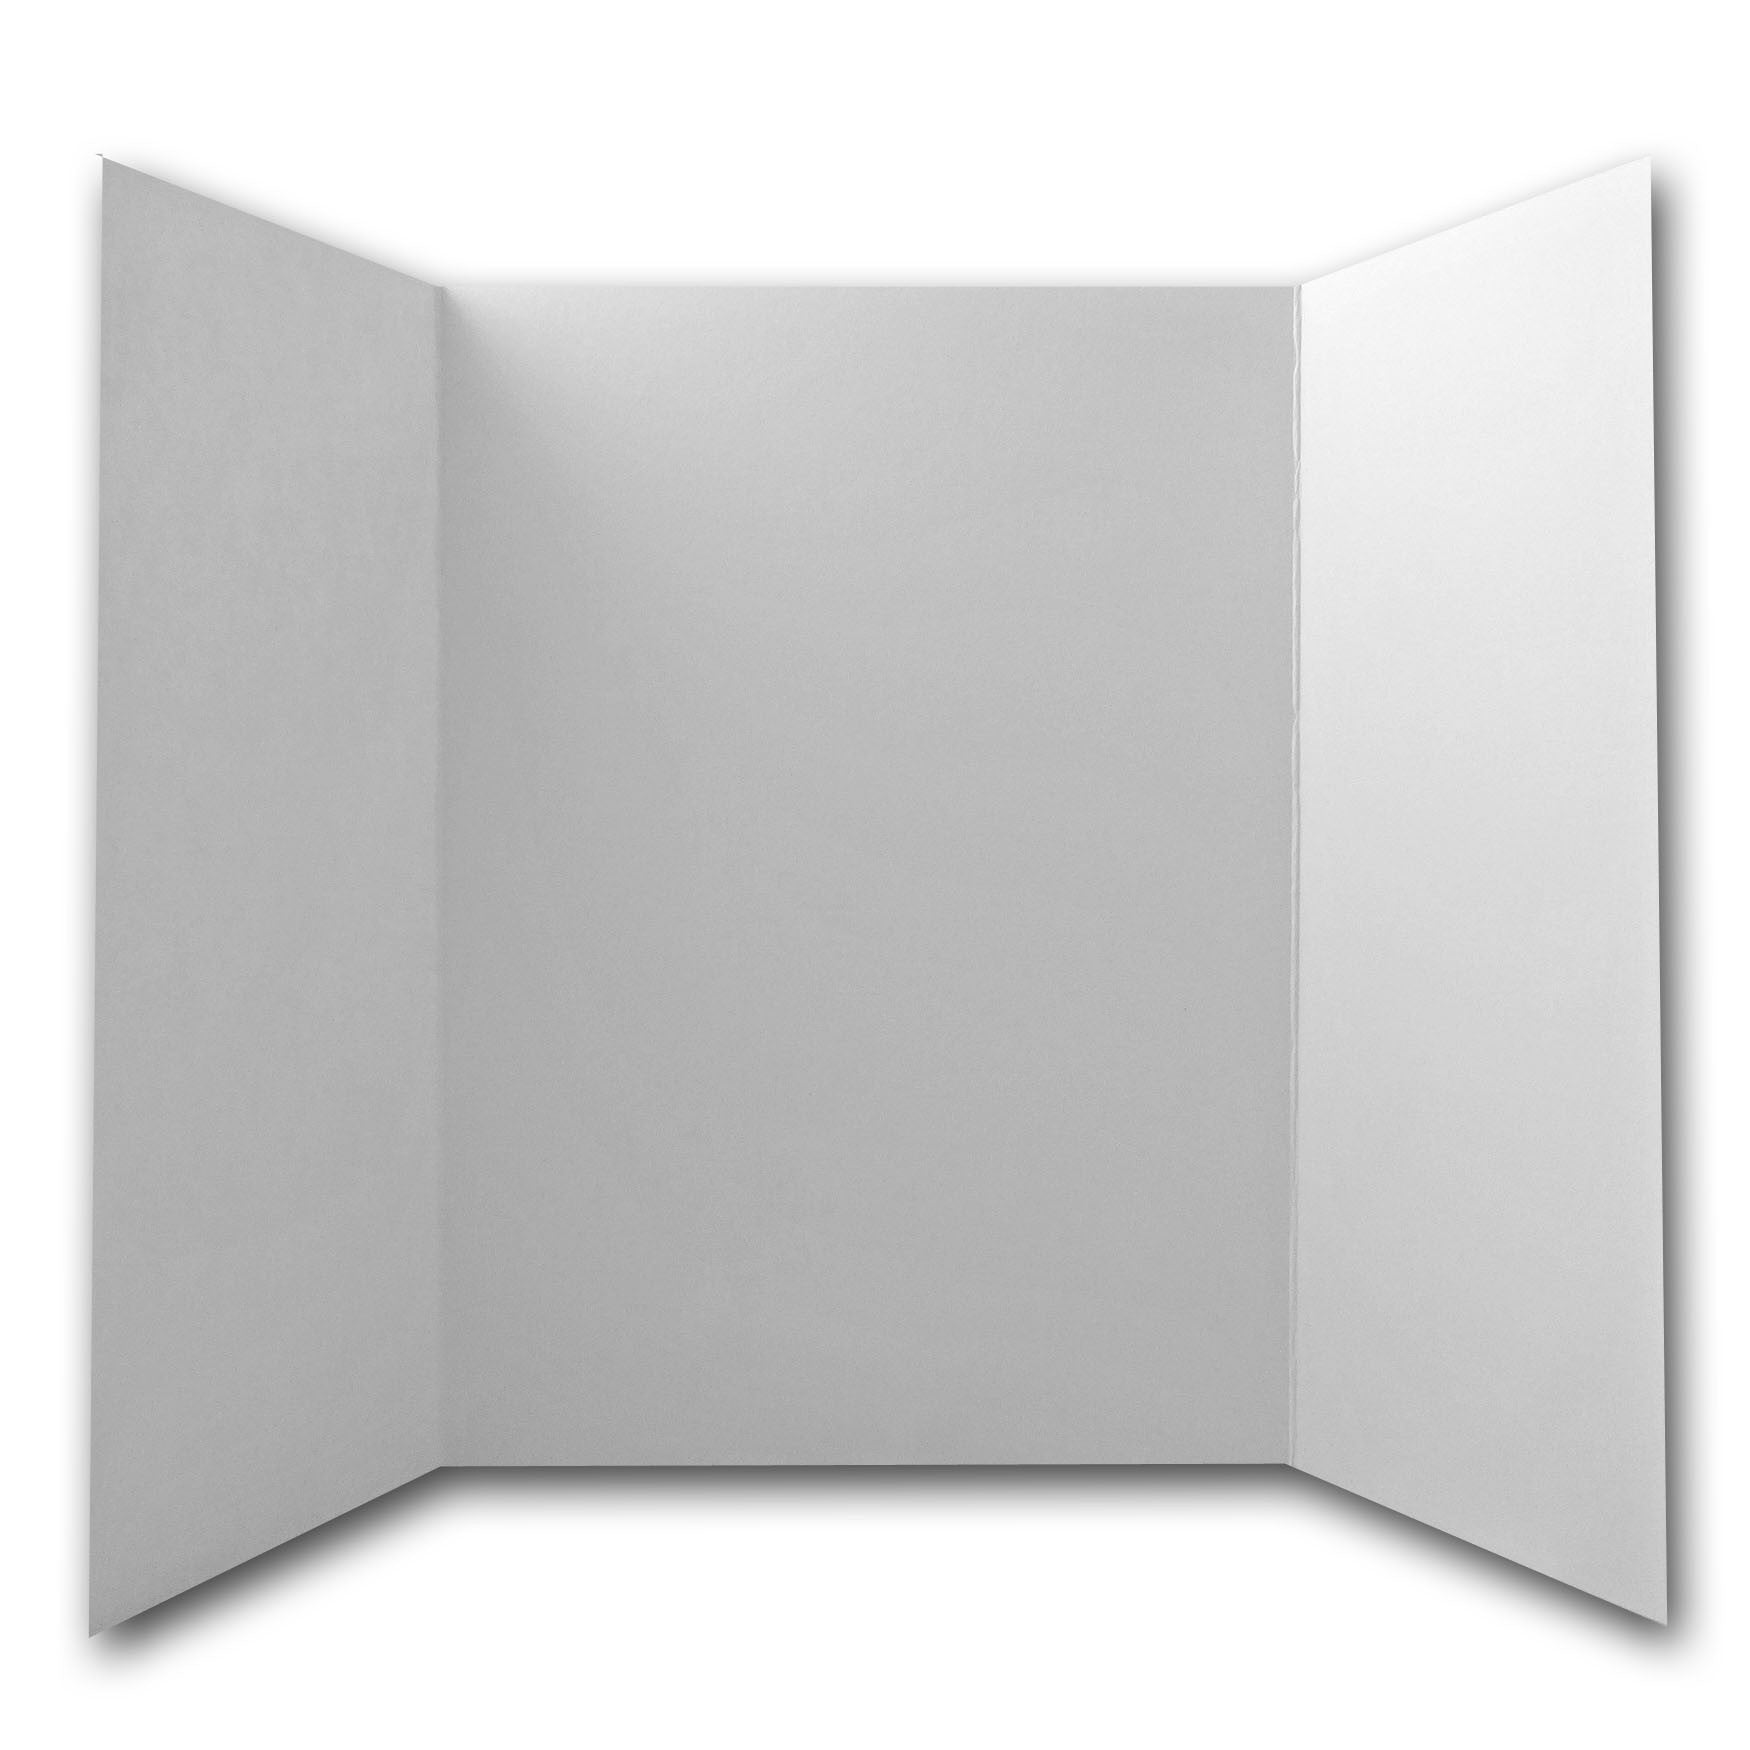 Pop-Tone 5x7 inch Folded Card Stock - Blank A7 Folded Invitation